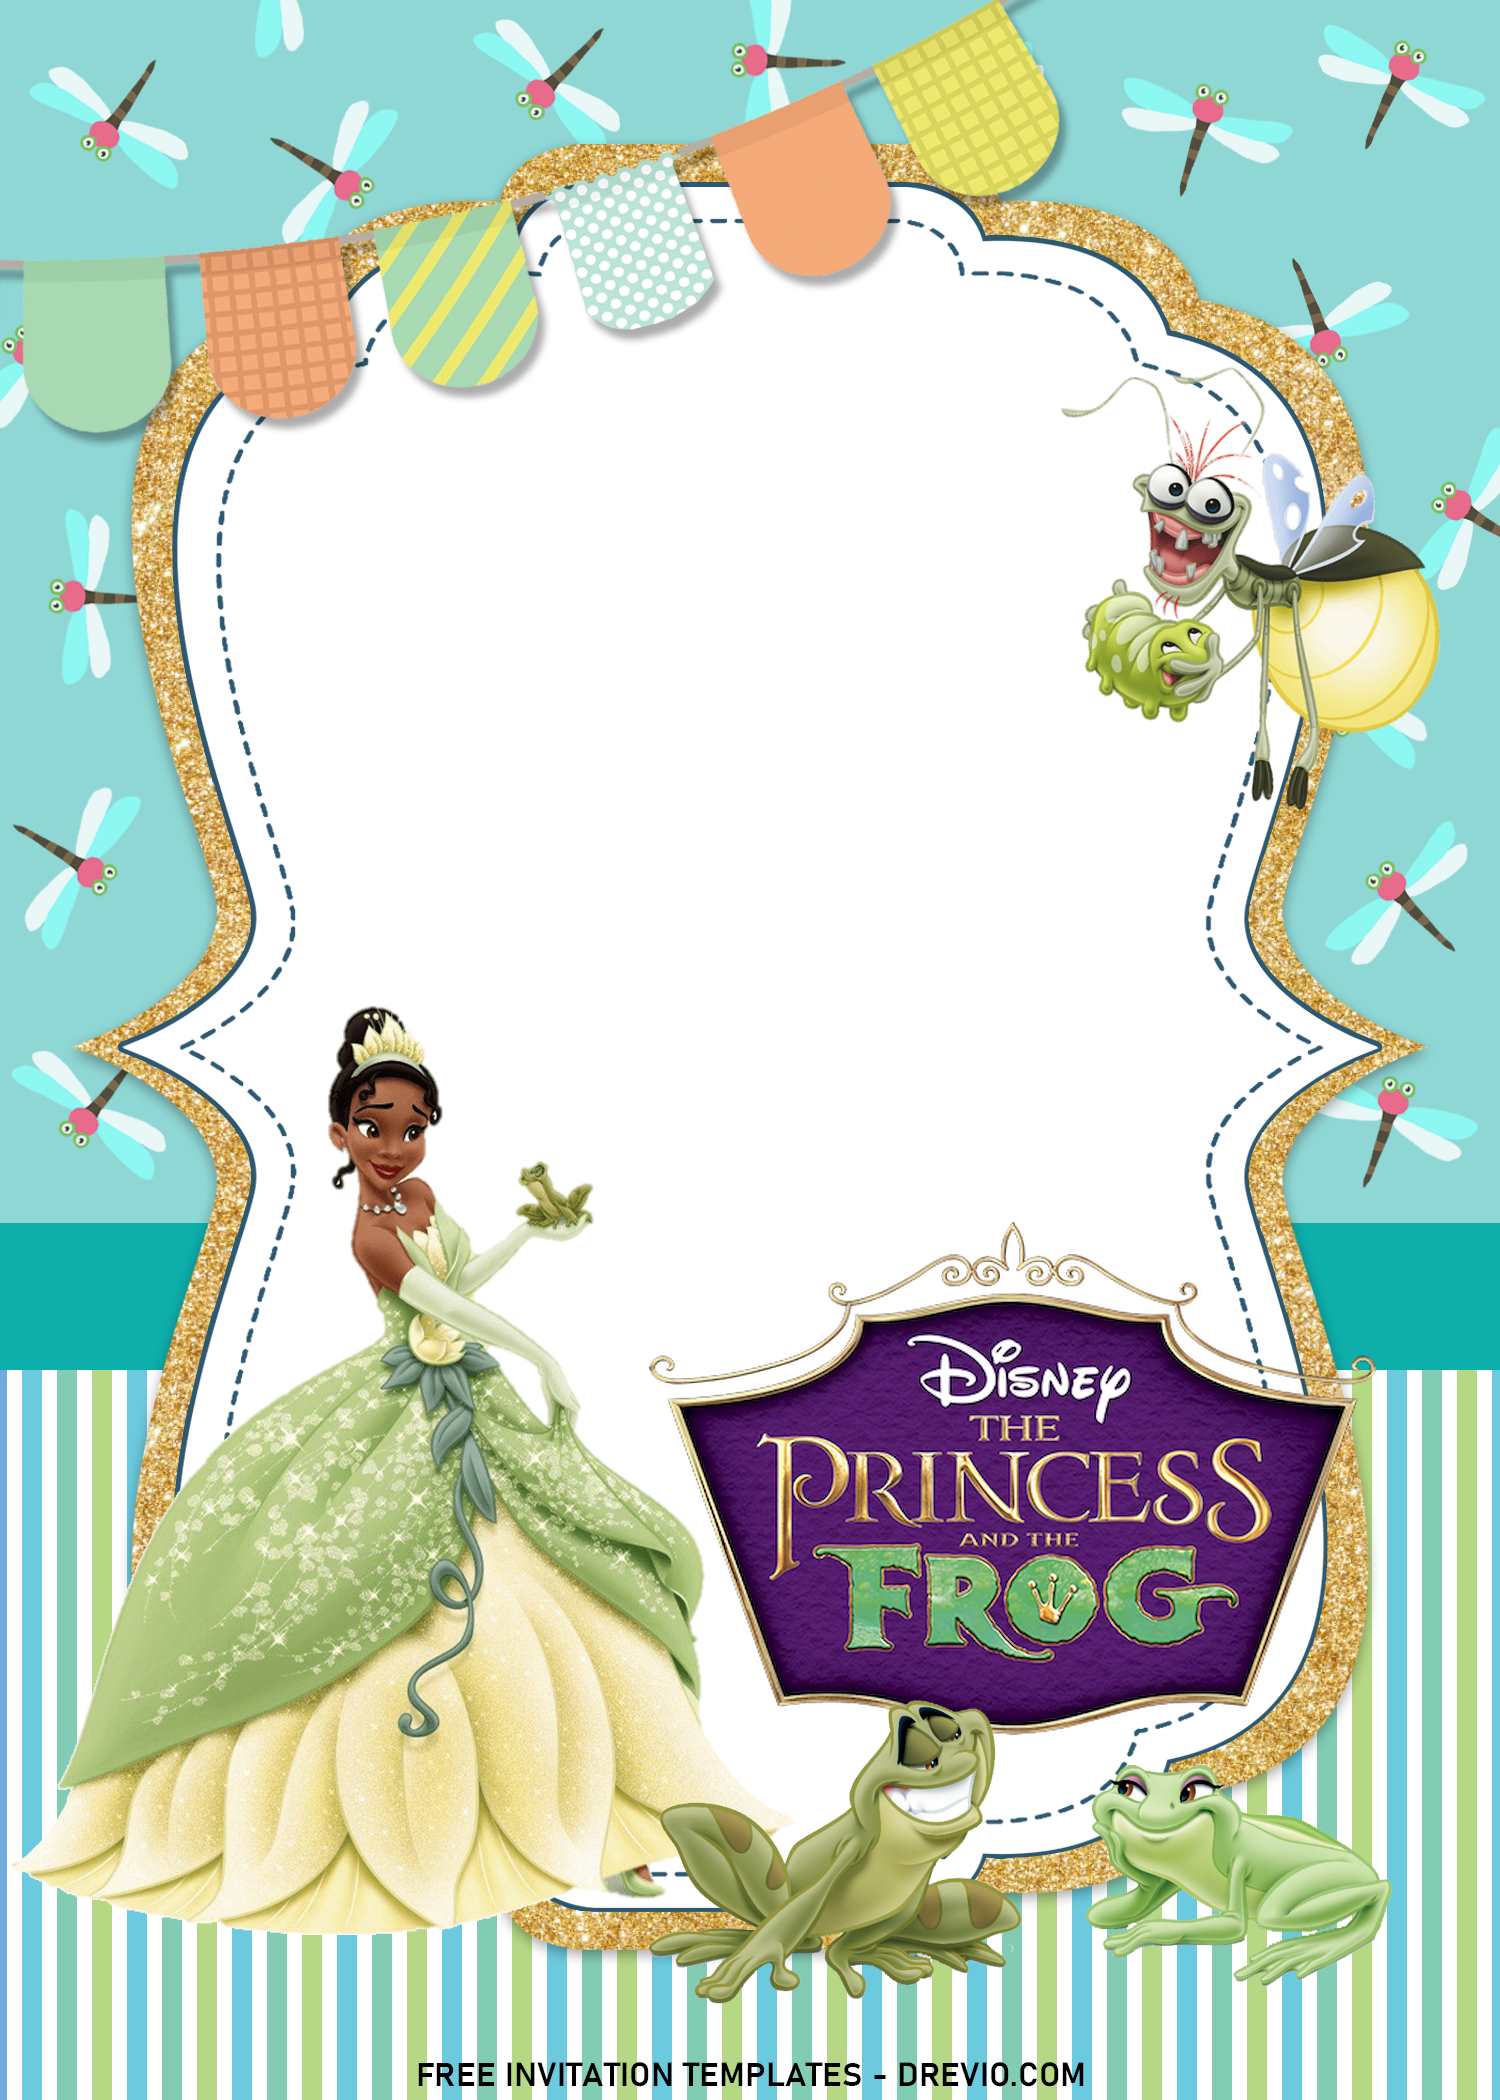 11 Princess Tiana And The Frog Birthday Invitation Templates Download Hundreds FREE PRINTABLE